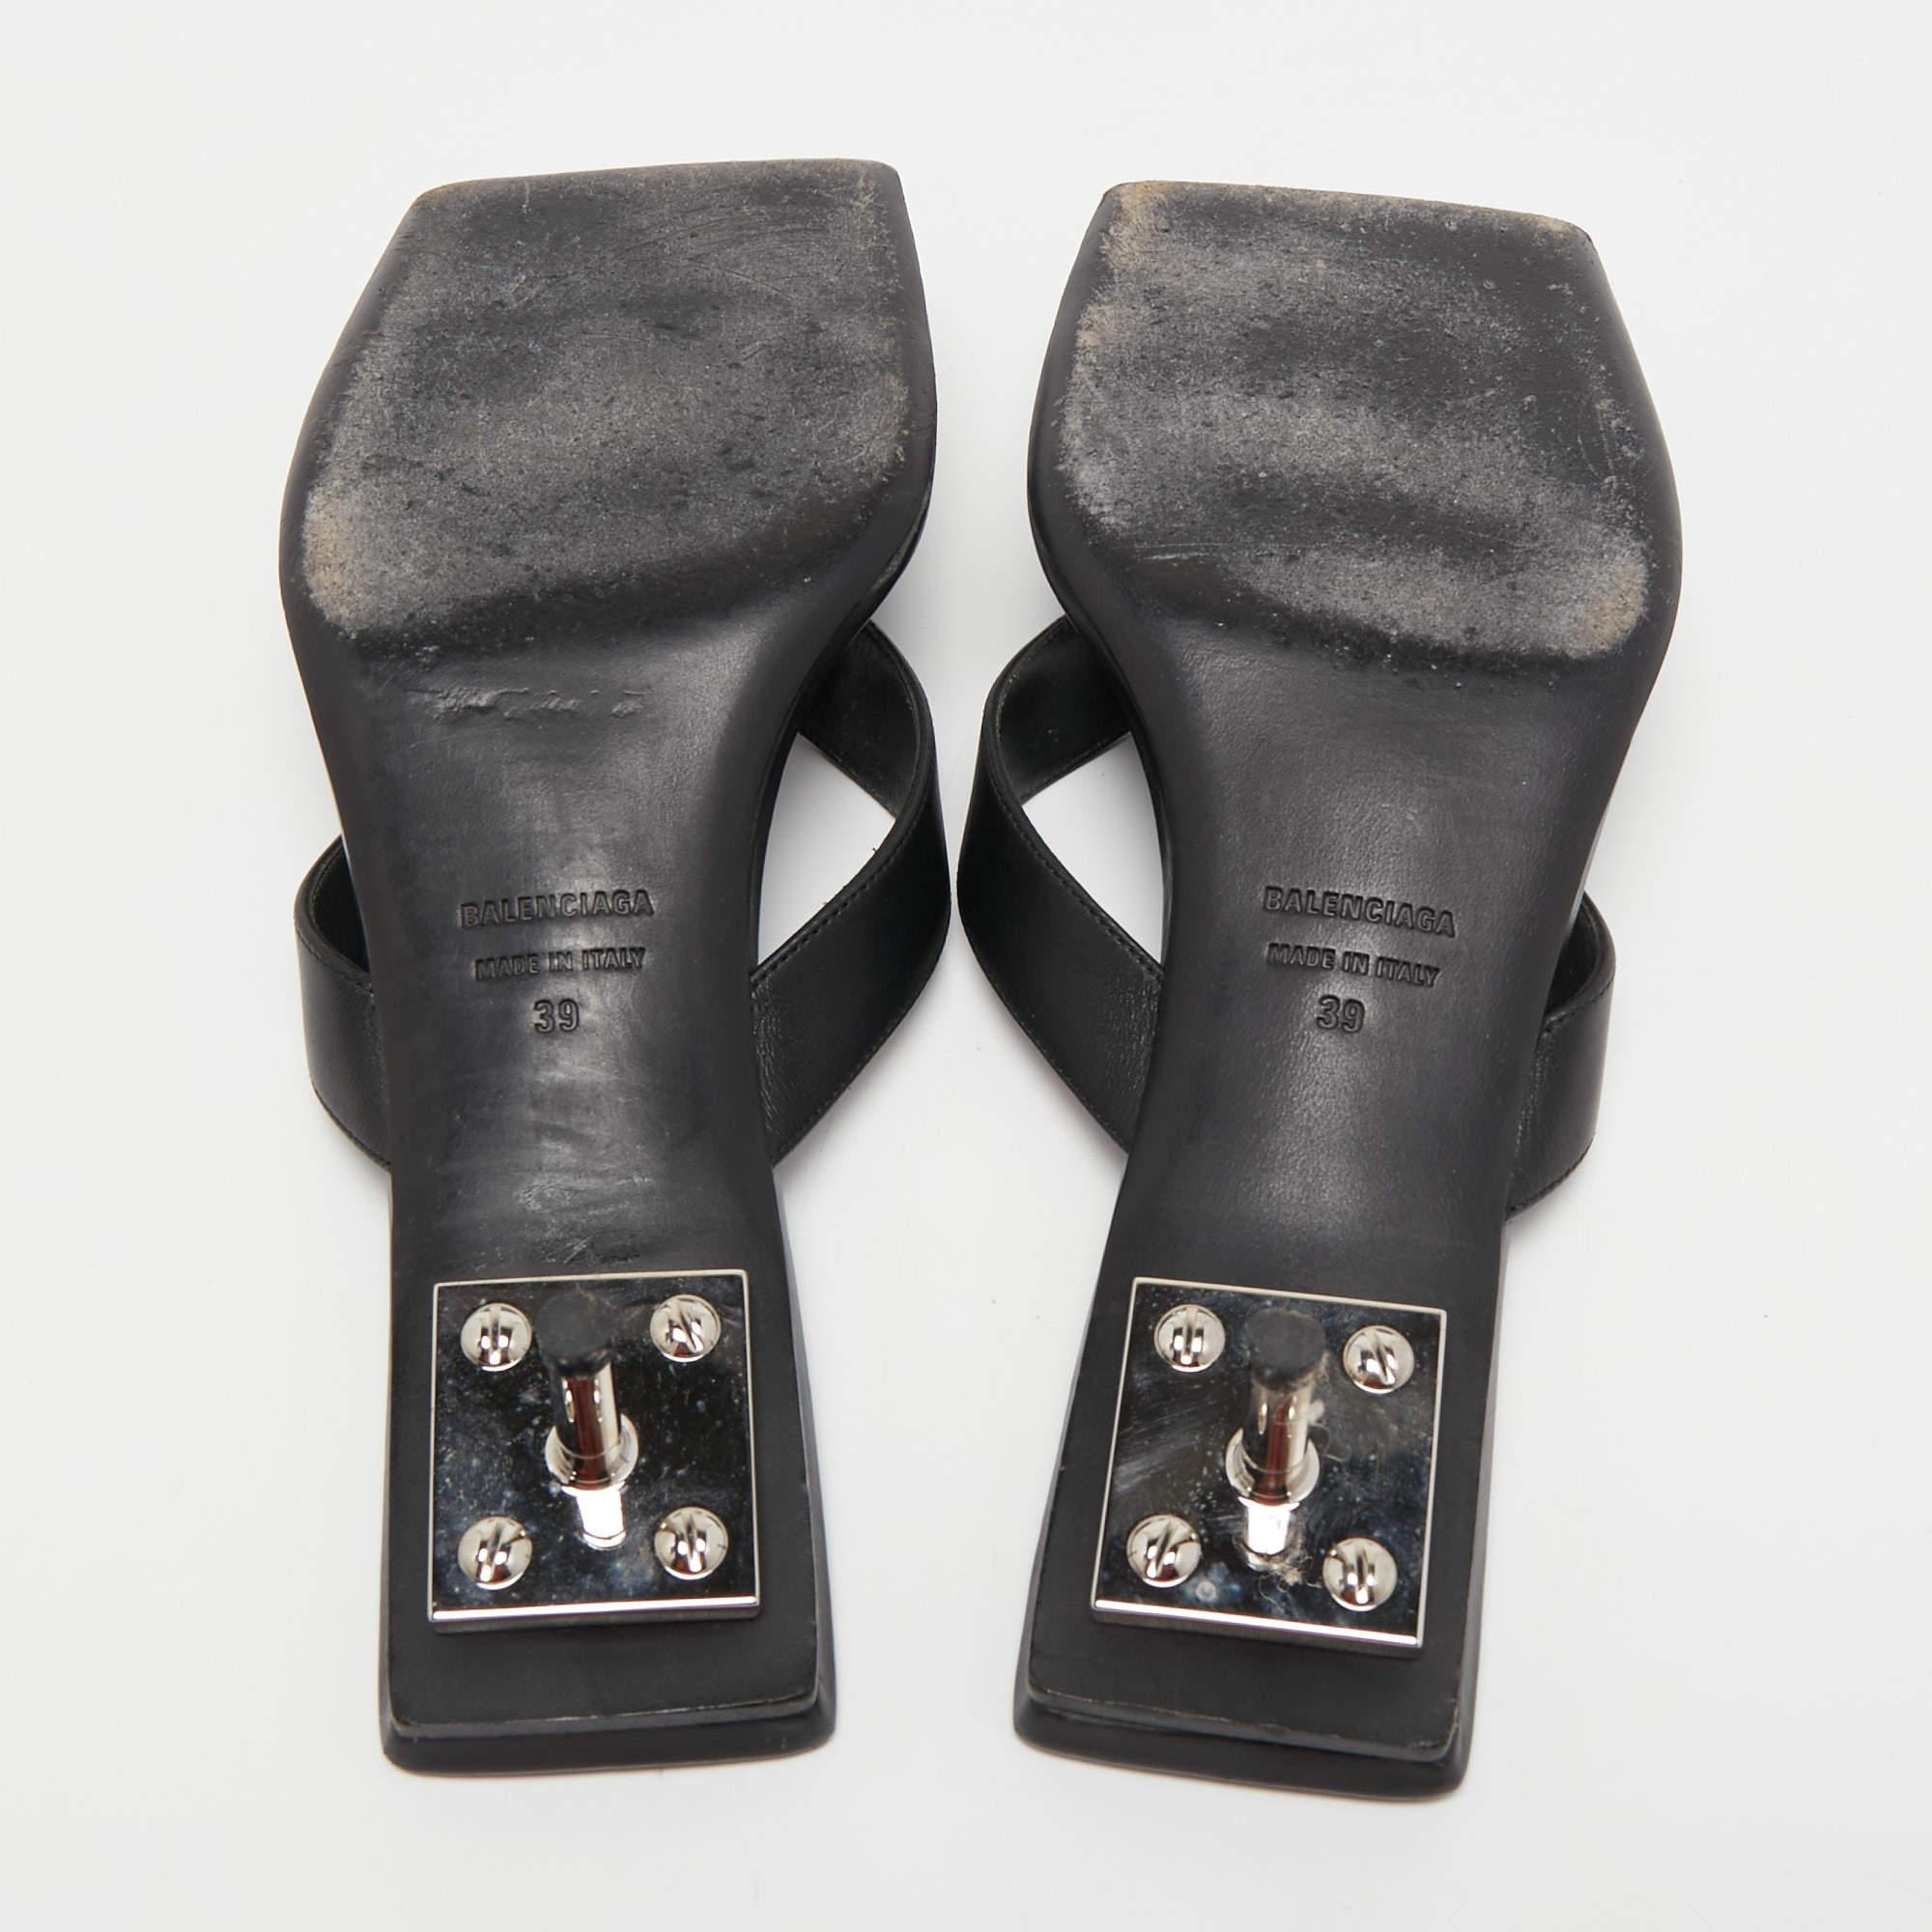 Balenciaga Black Leather Square Toe Thong Slide Sandals Size 39 For Sale 4